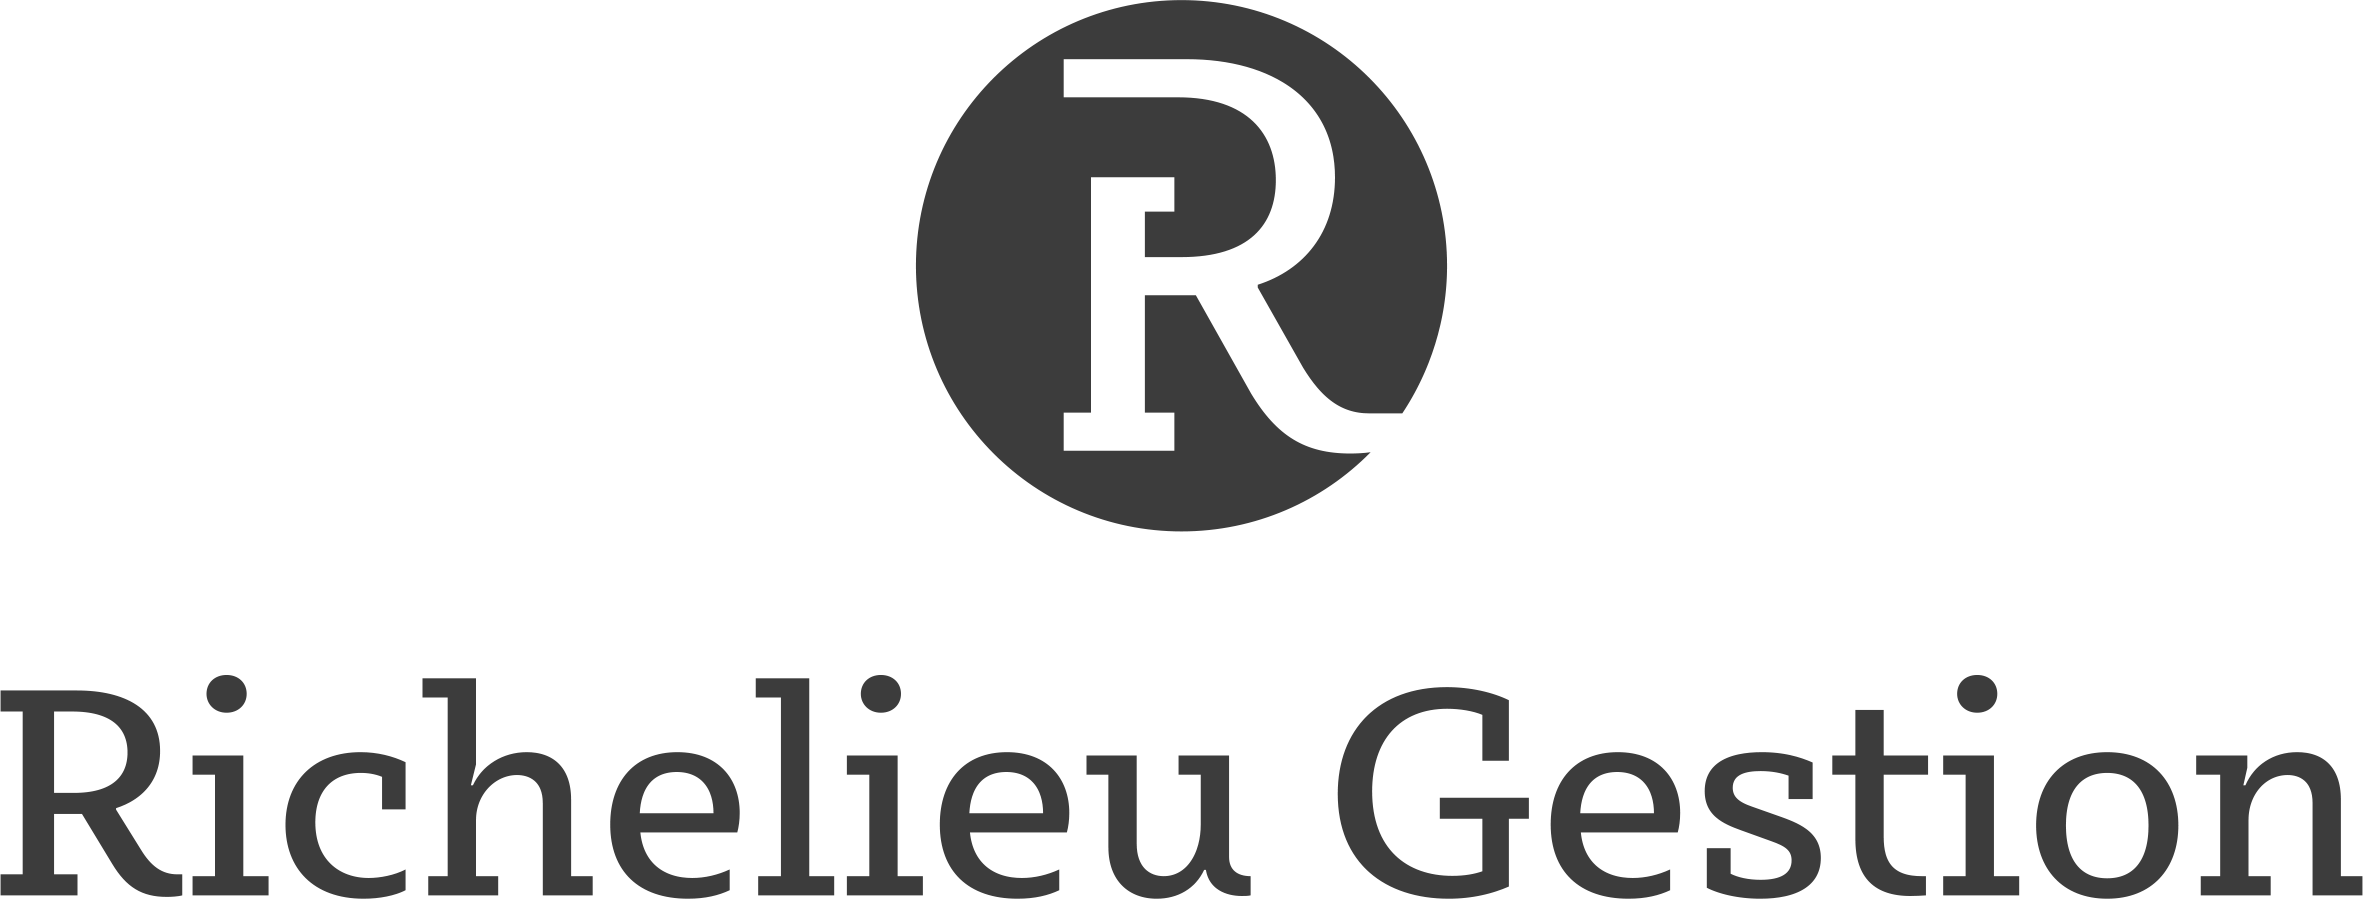 Accueil - Richelieu Gestion